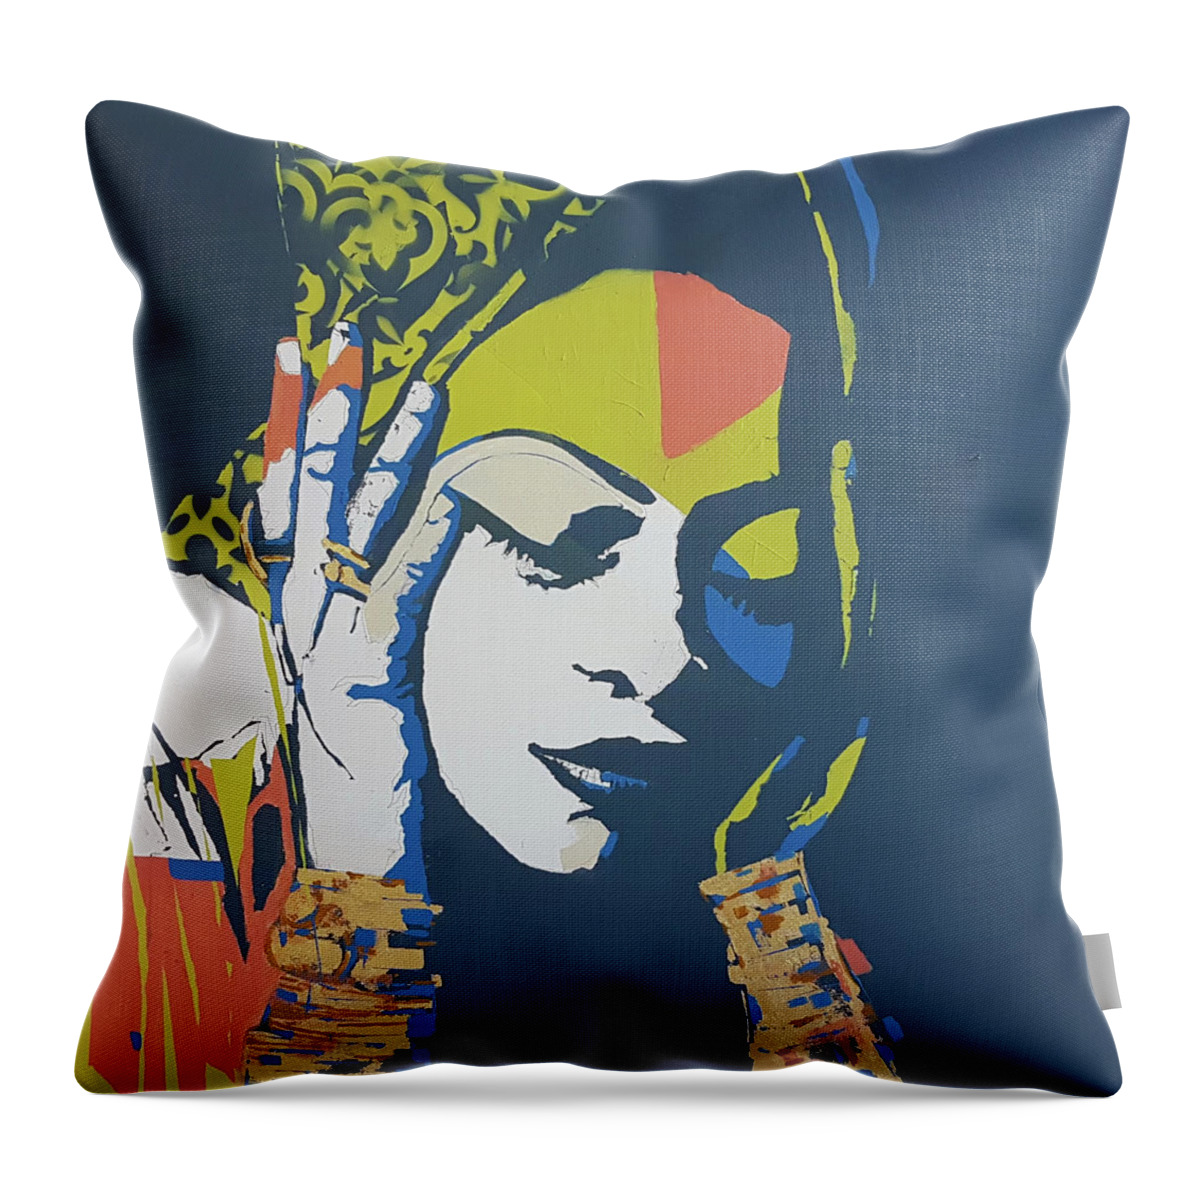 Erykah Badu Image Throw Pillow featuring the painting Erykah Badu by Paul Lovering